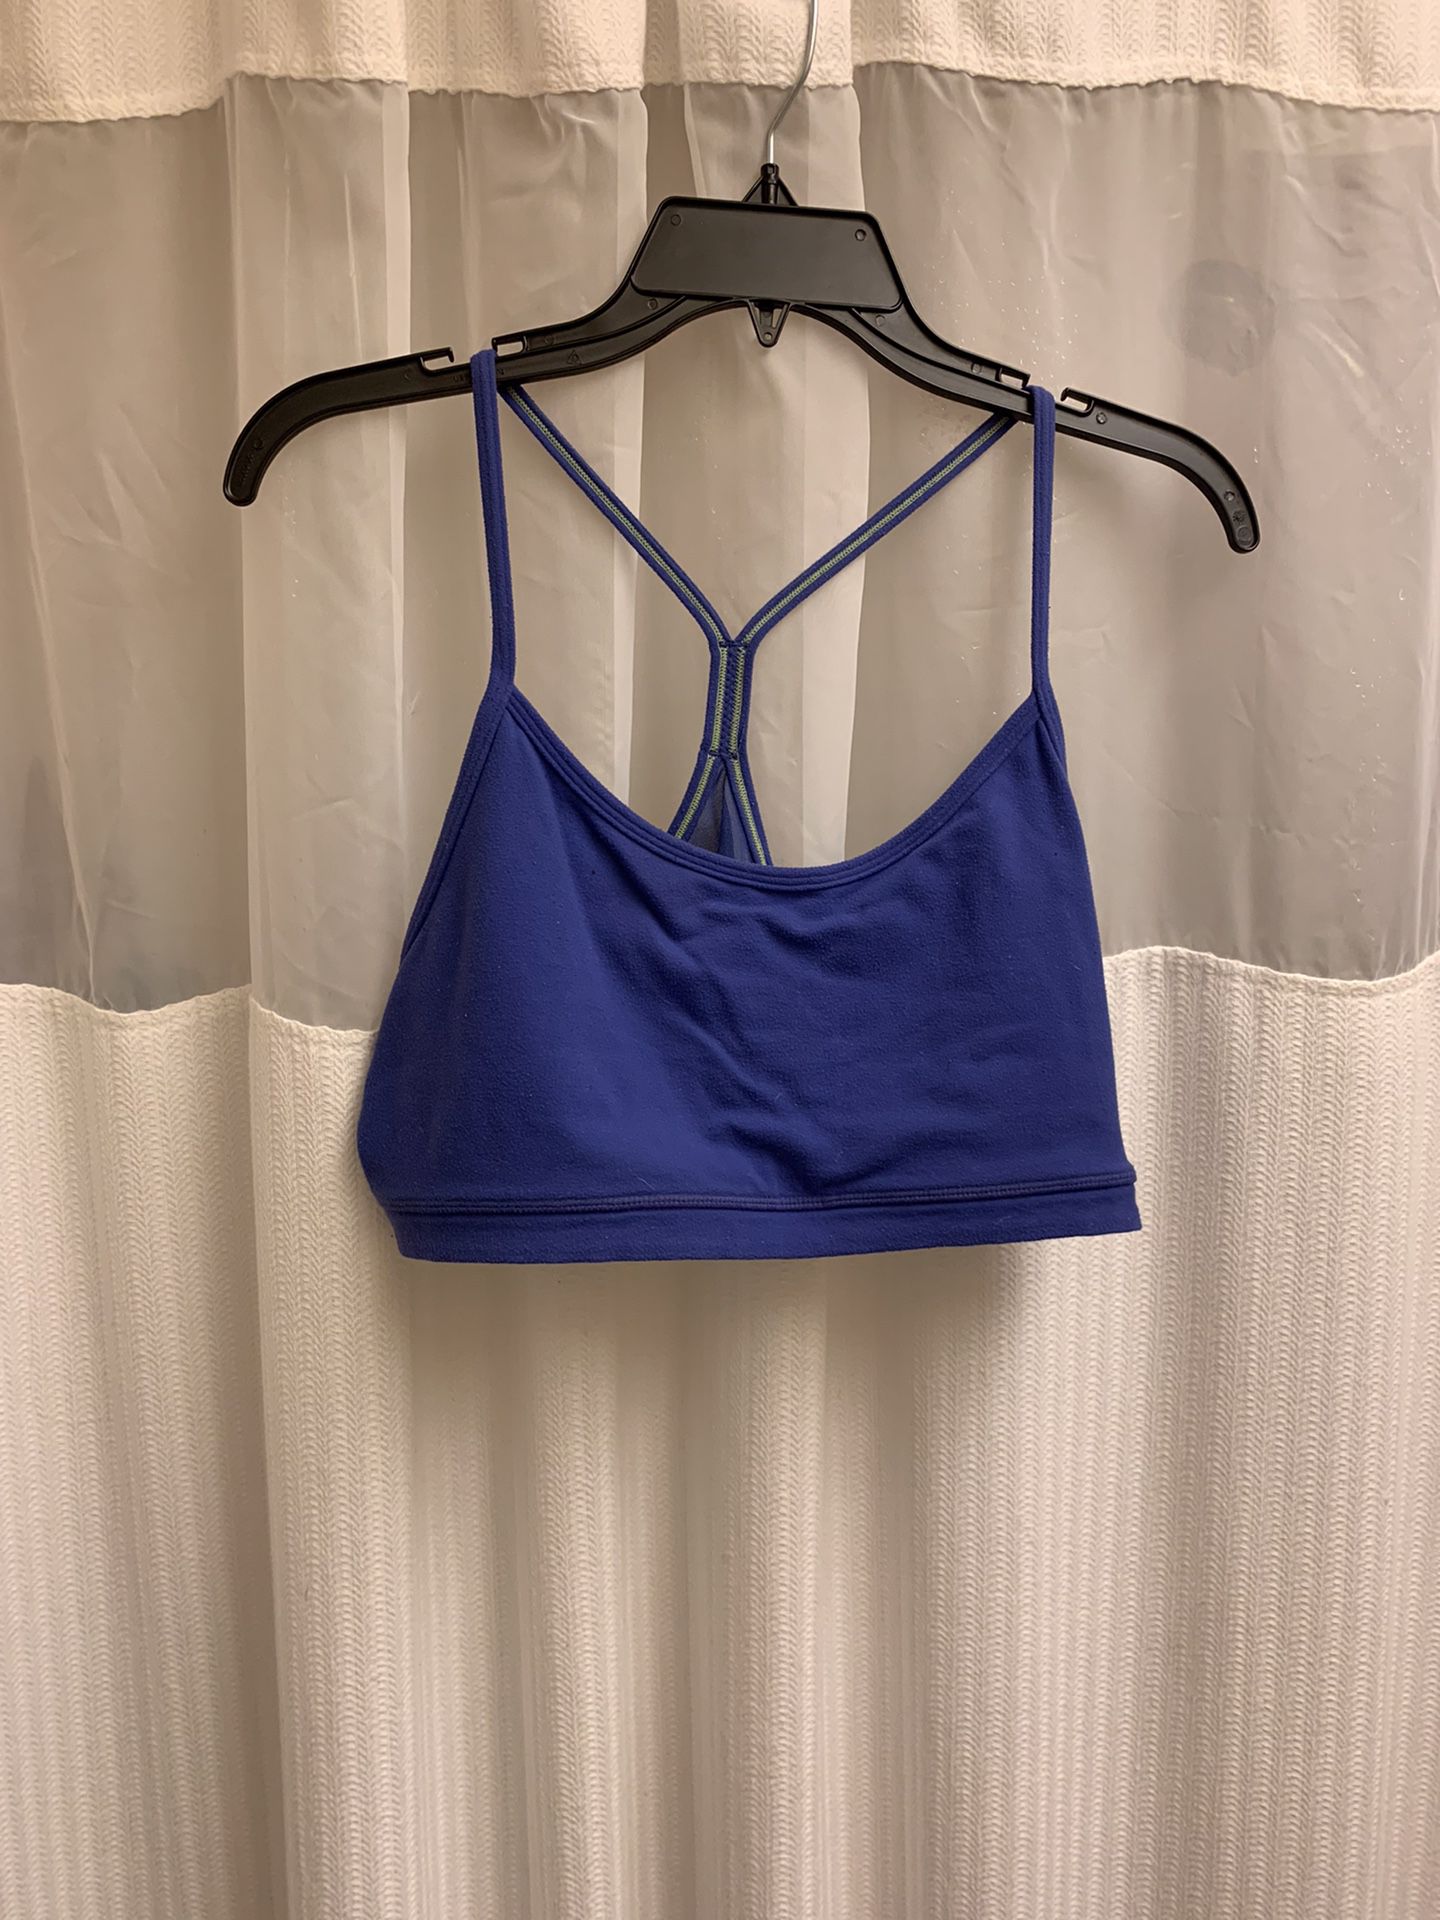 Lululemon blue purple raceback sports bra size 12 fair condition, used, no bra pads included 